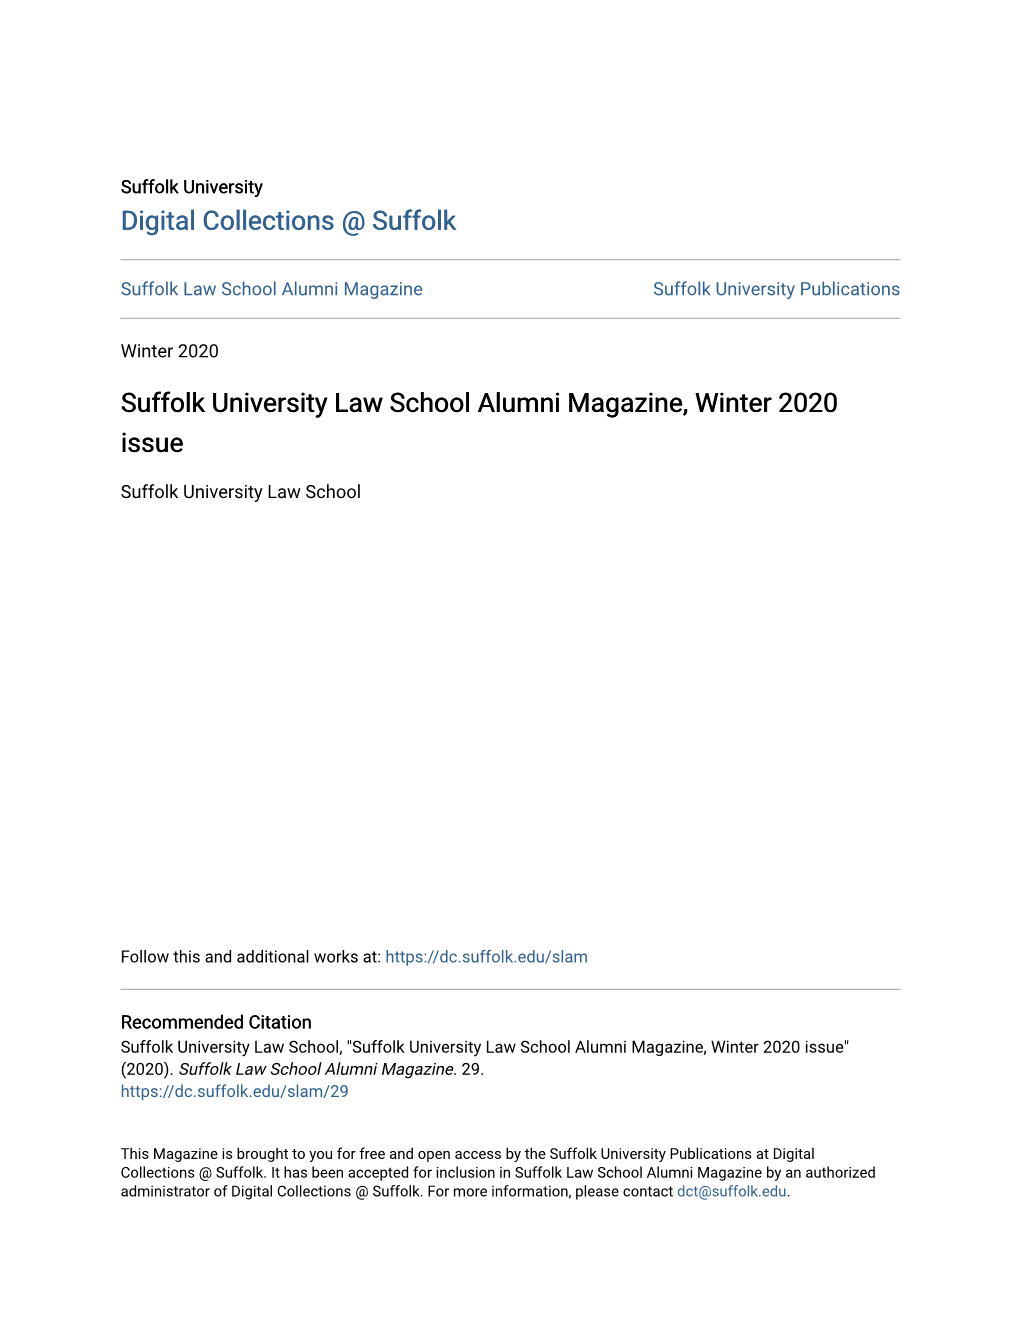 Suffolk University Law School Alumni Magazine, Winter 2020 Issue